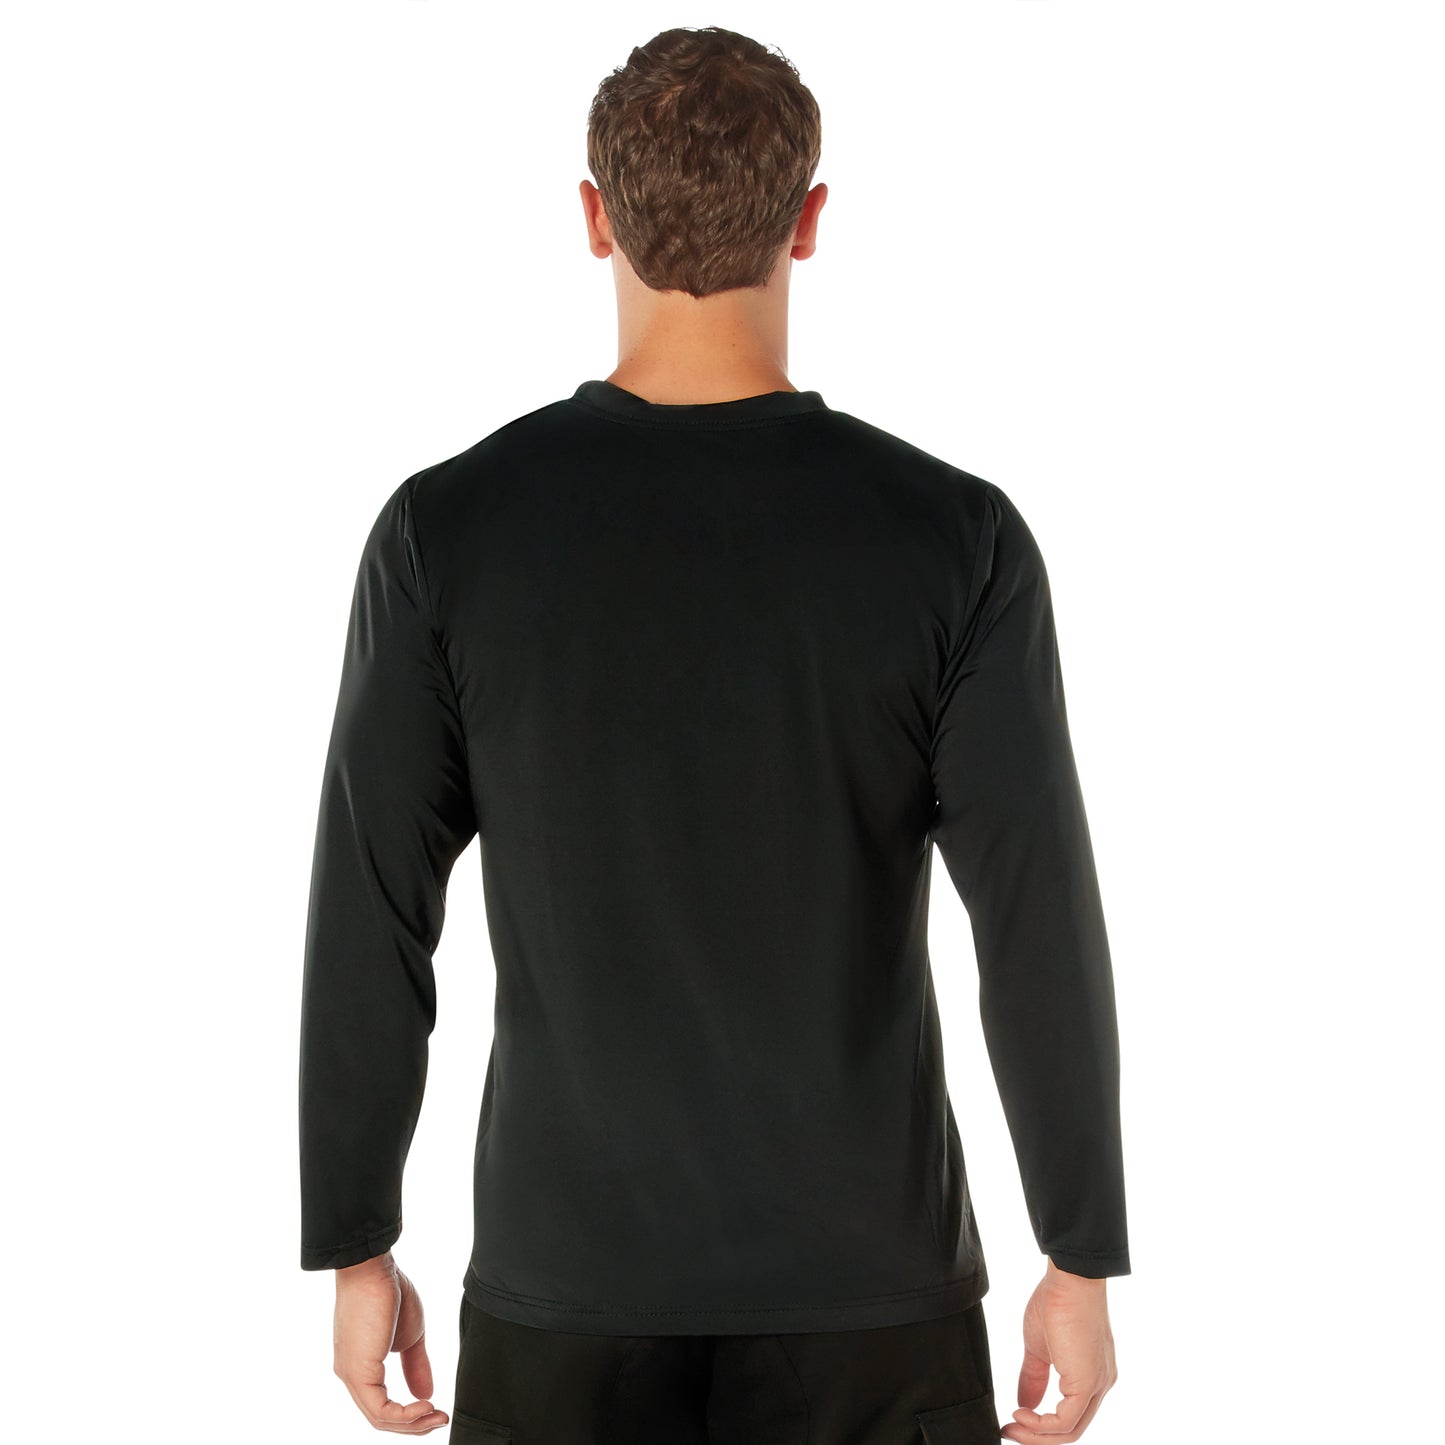 Rothco Long Sleeve Army PT Shirt Moisture Wicking - Black